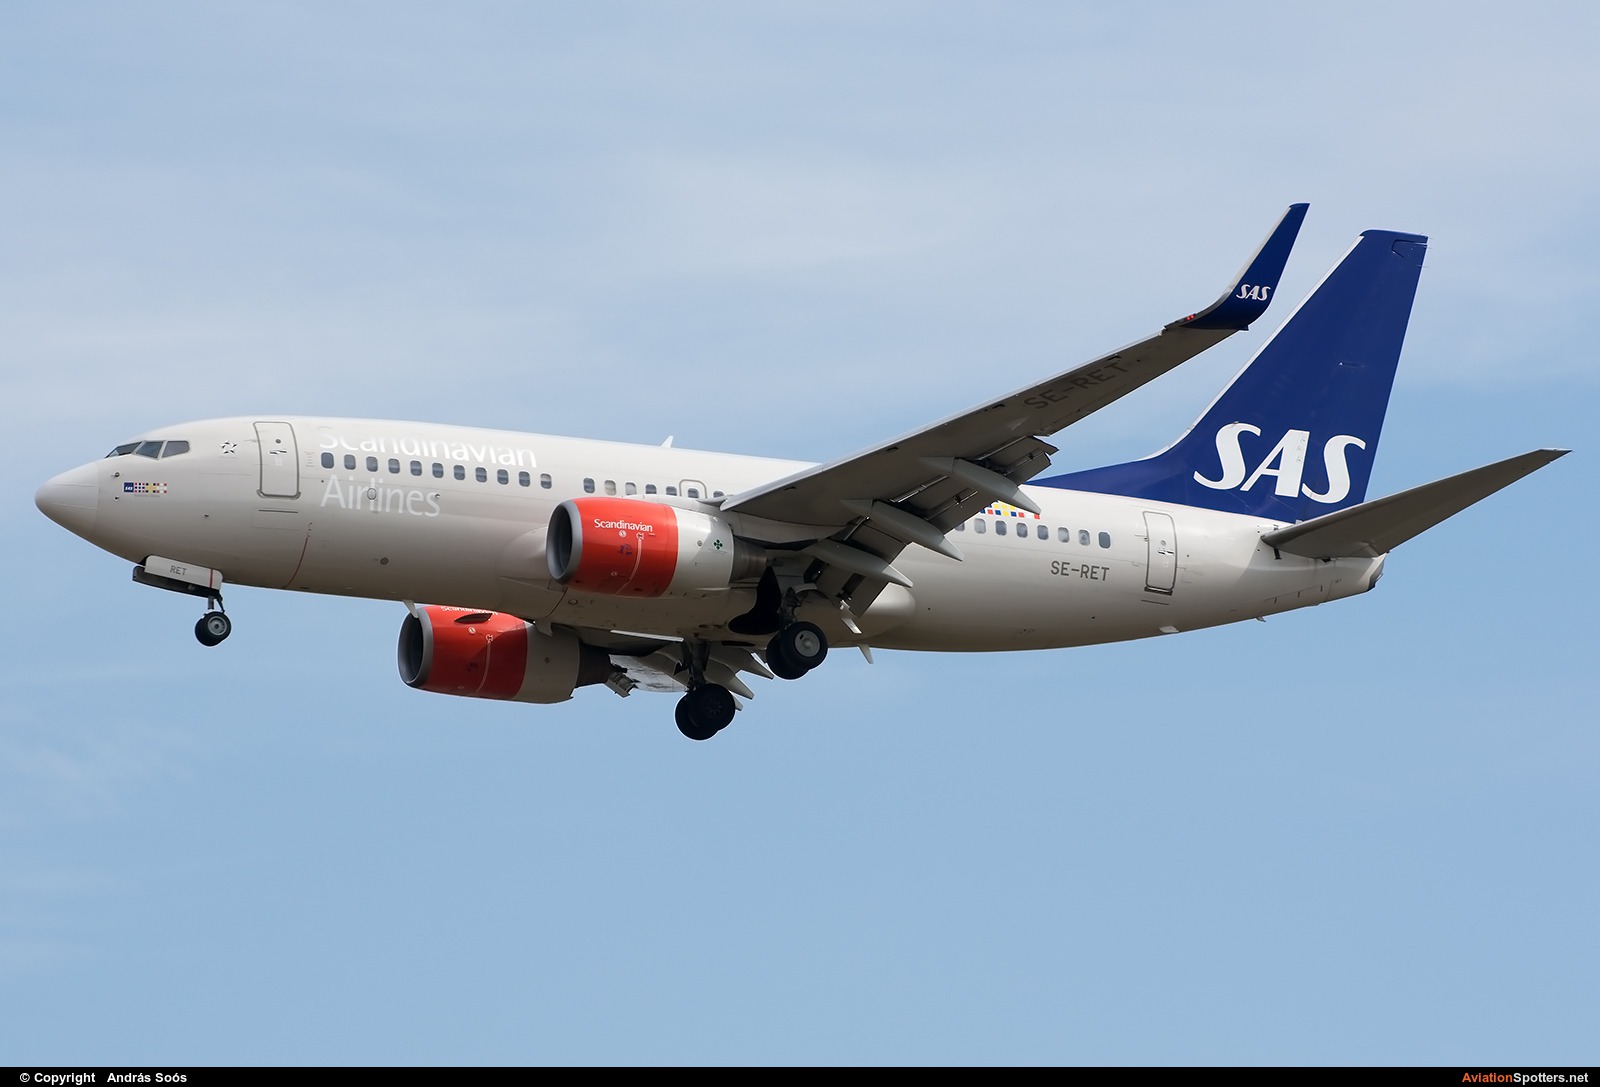 SAS - Scandinavian Airlines  -  737-700  (SE-RET) By András Soós (sas1965)